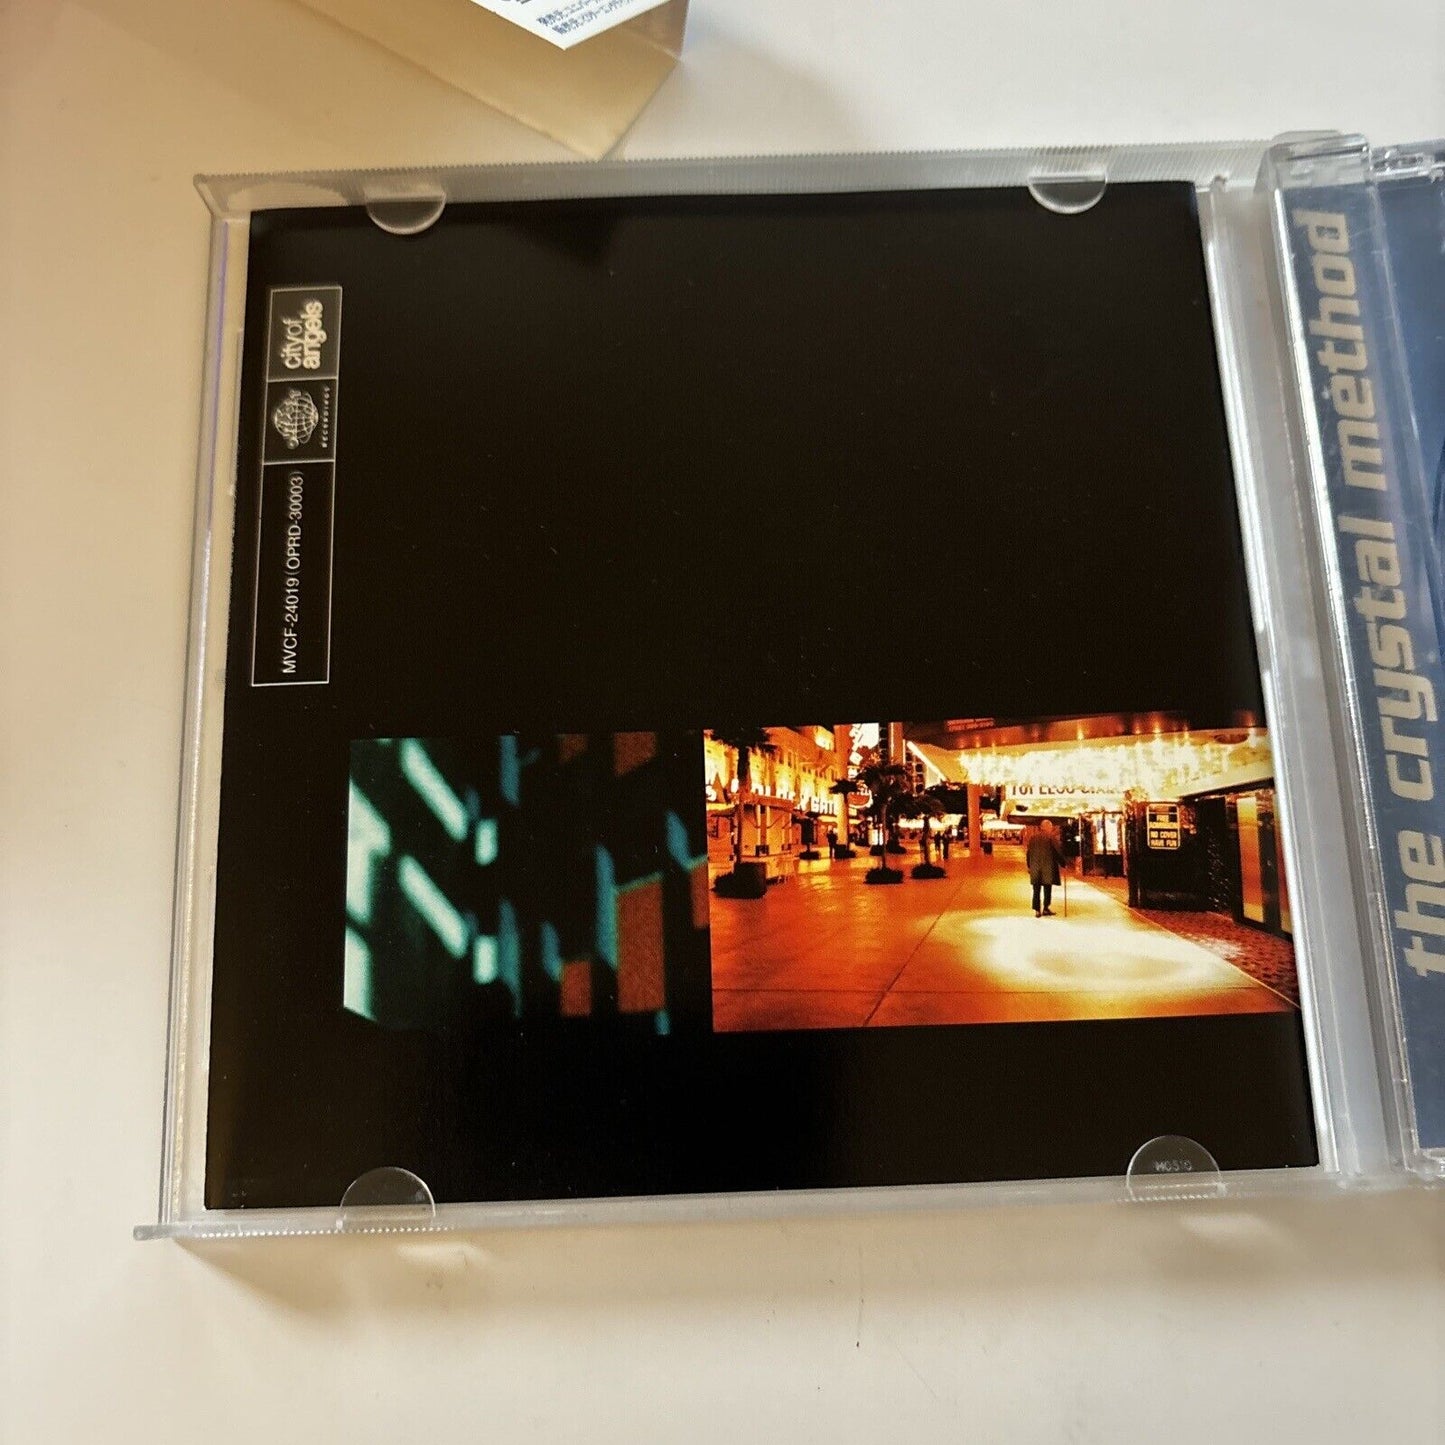 The Crystal Method - Vegas (CD, 1997) Obi Japan Geffen Records  Mvcf-24019